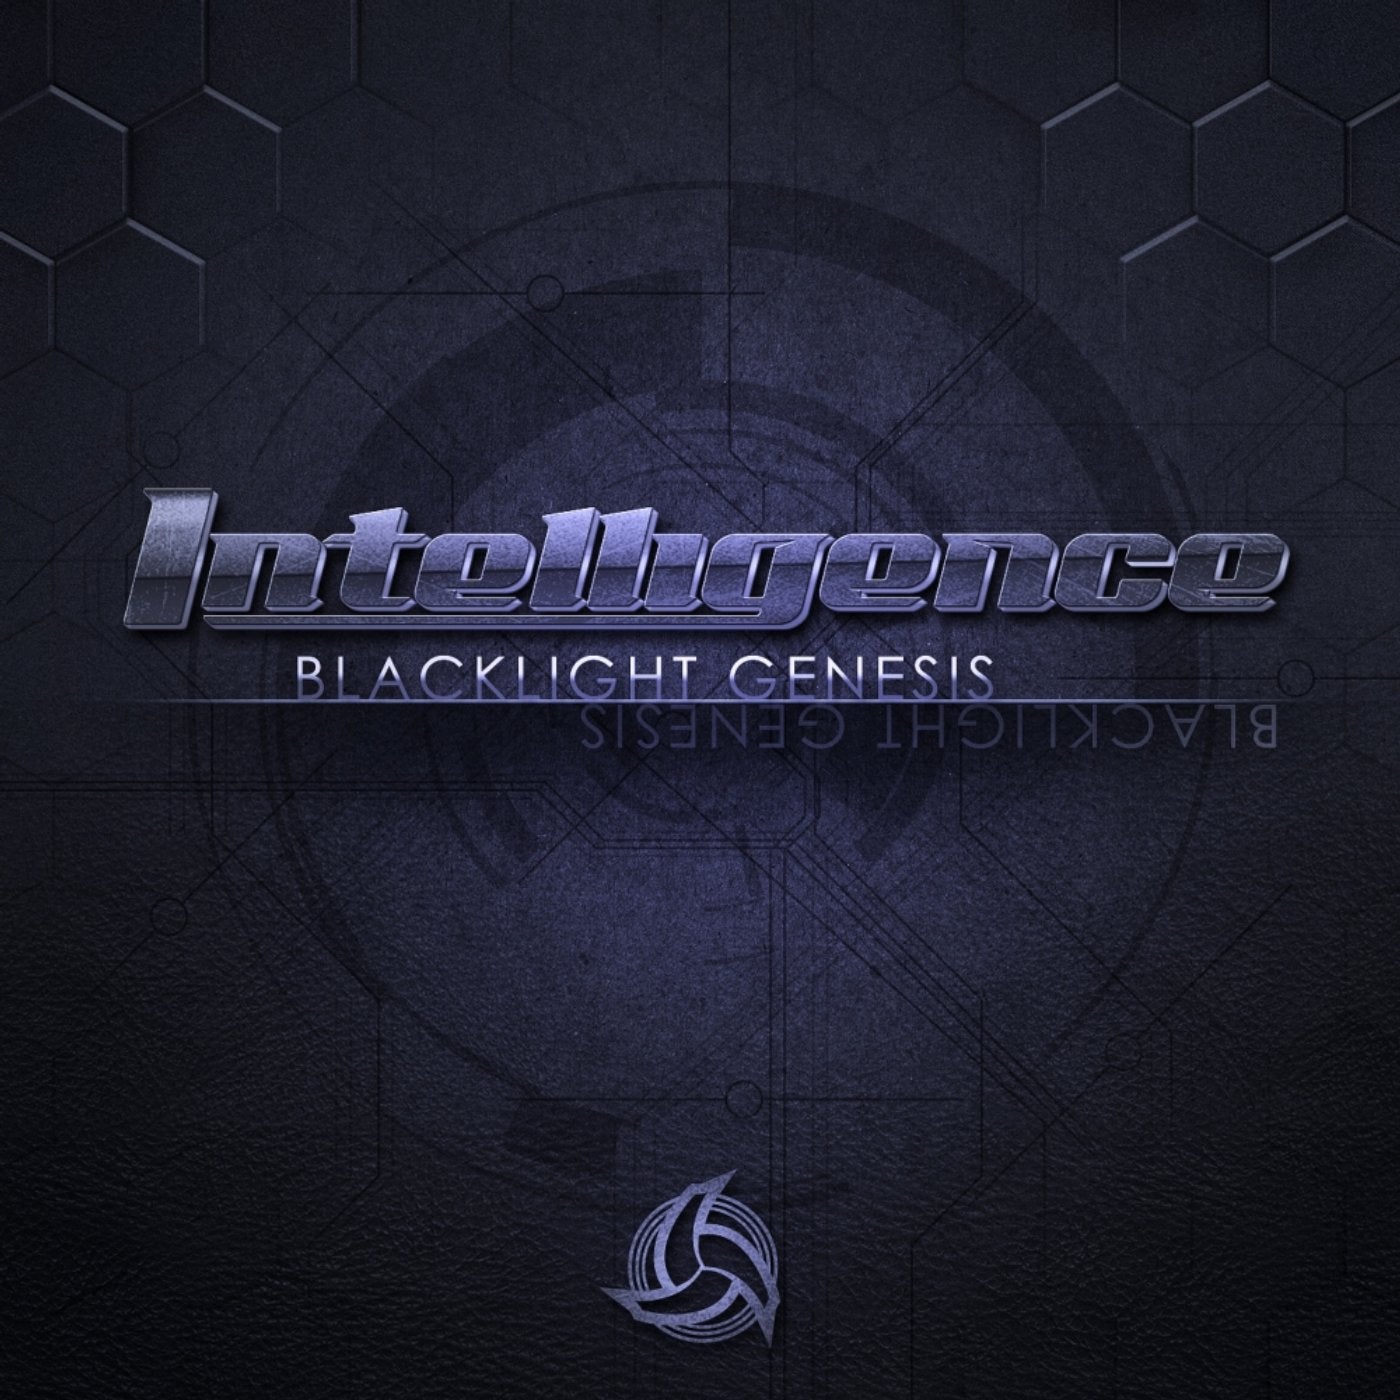 Blacklight Genesis